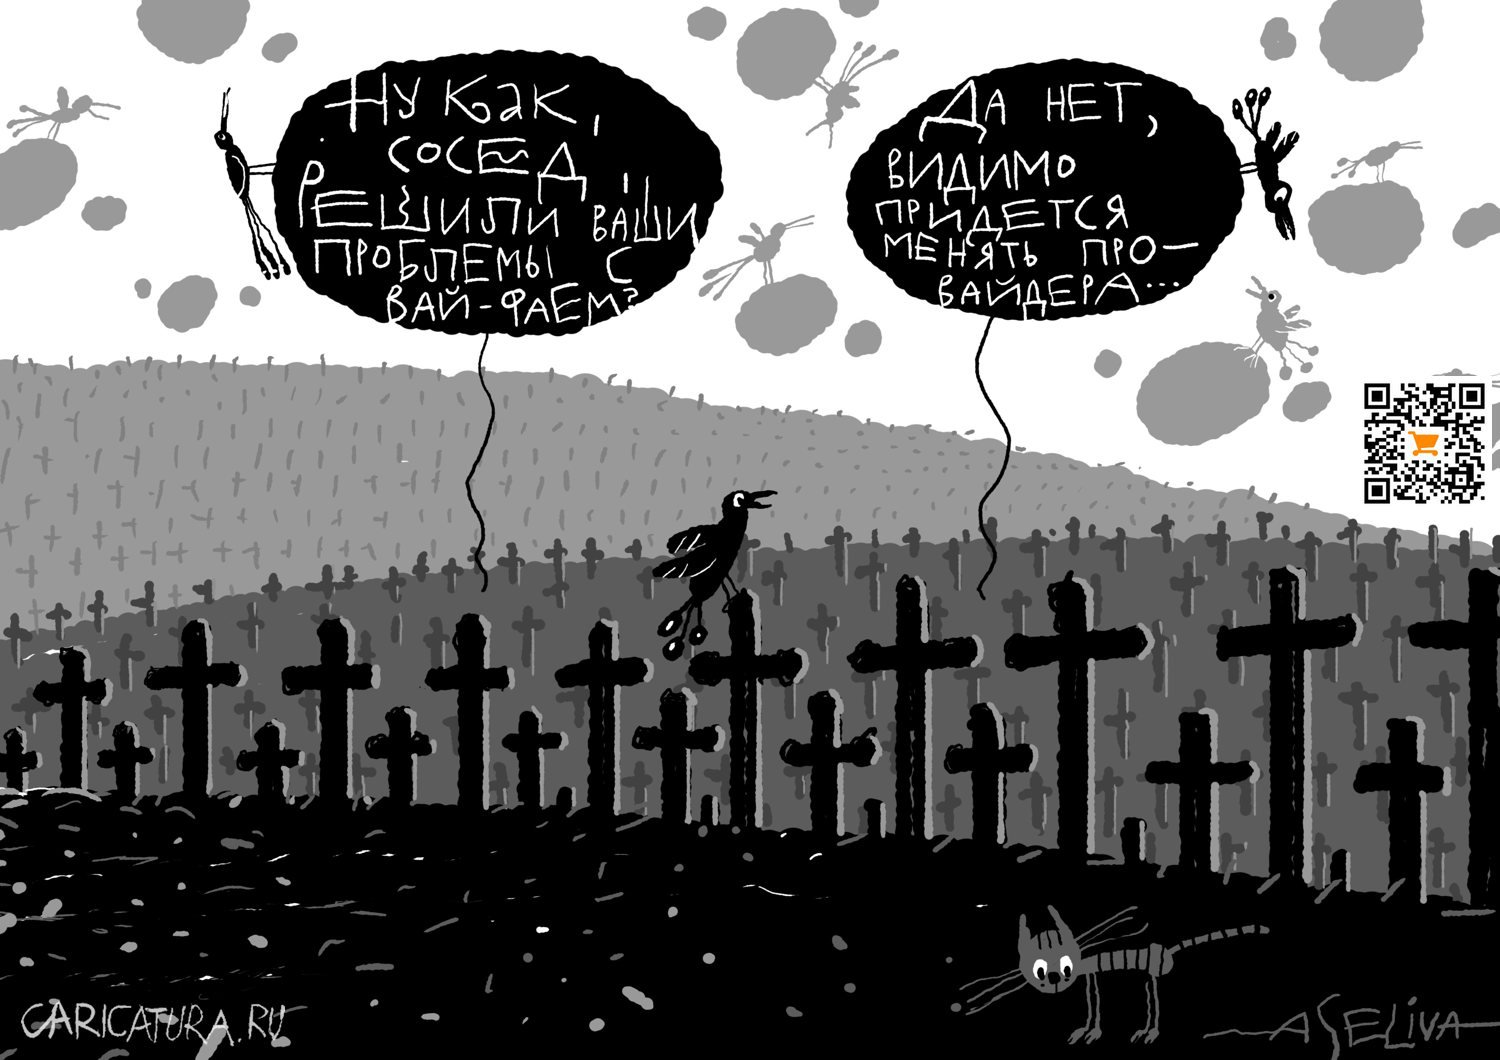 Карикатура "3G... 4G... 5G... и так далее...", Андрей Селиванов